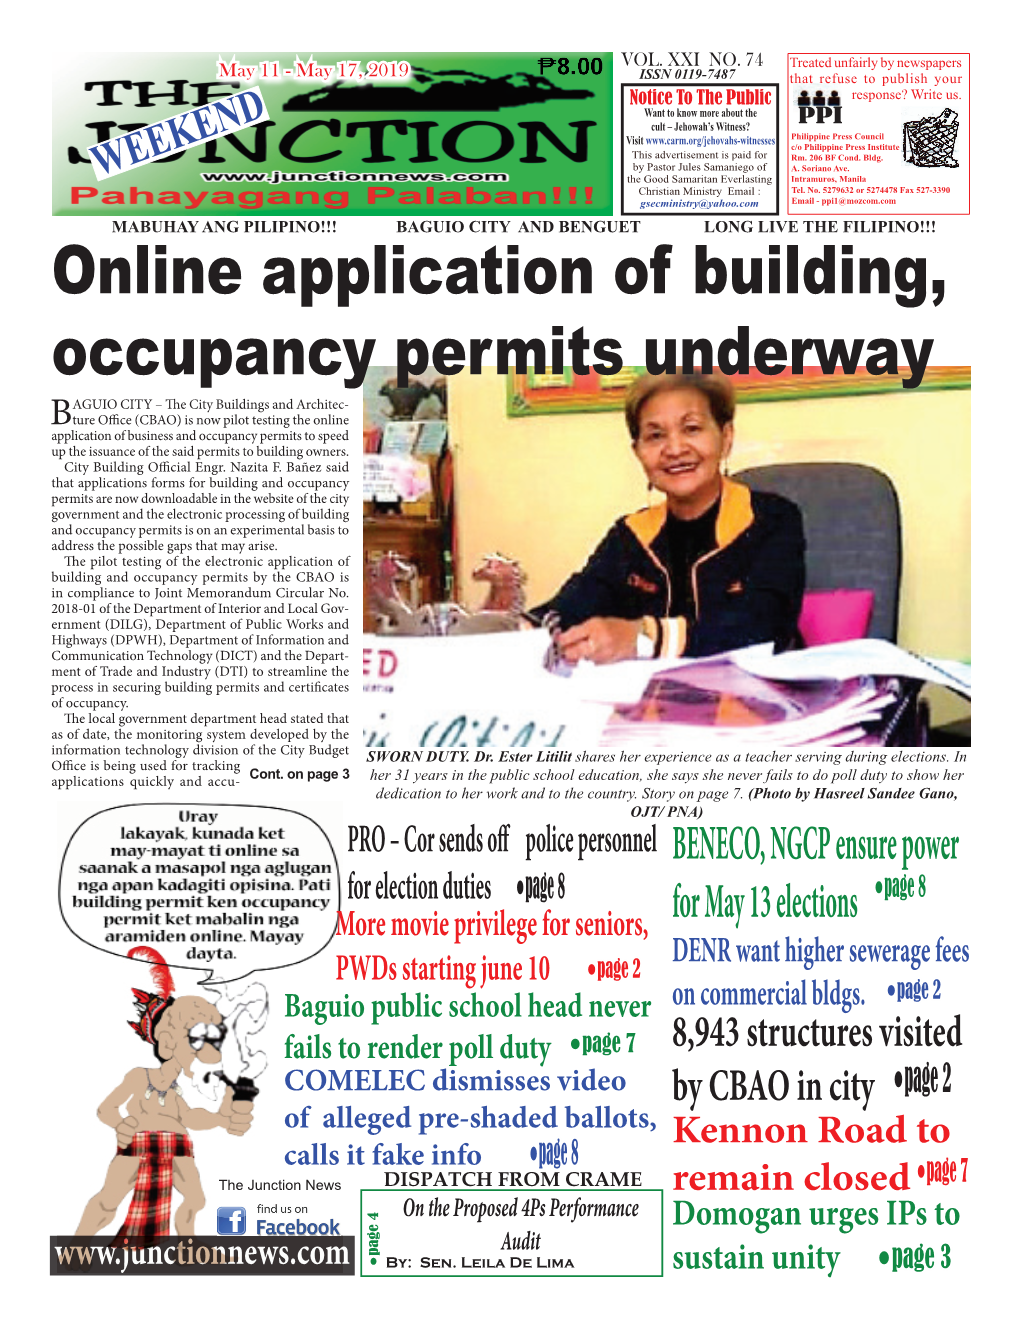 Online Application of Building, Occupancy Permits Underway